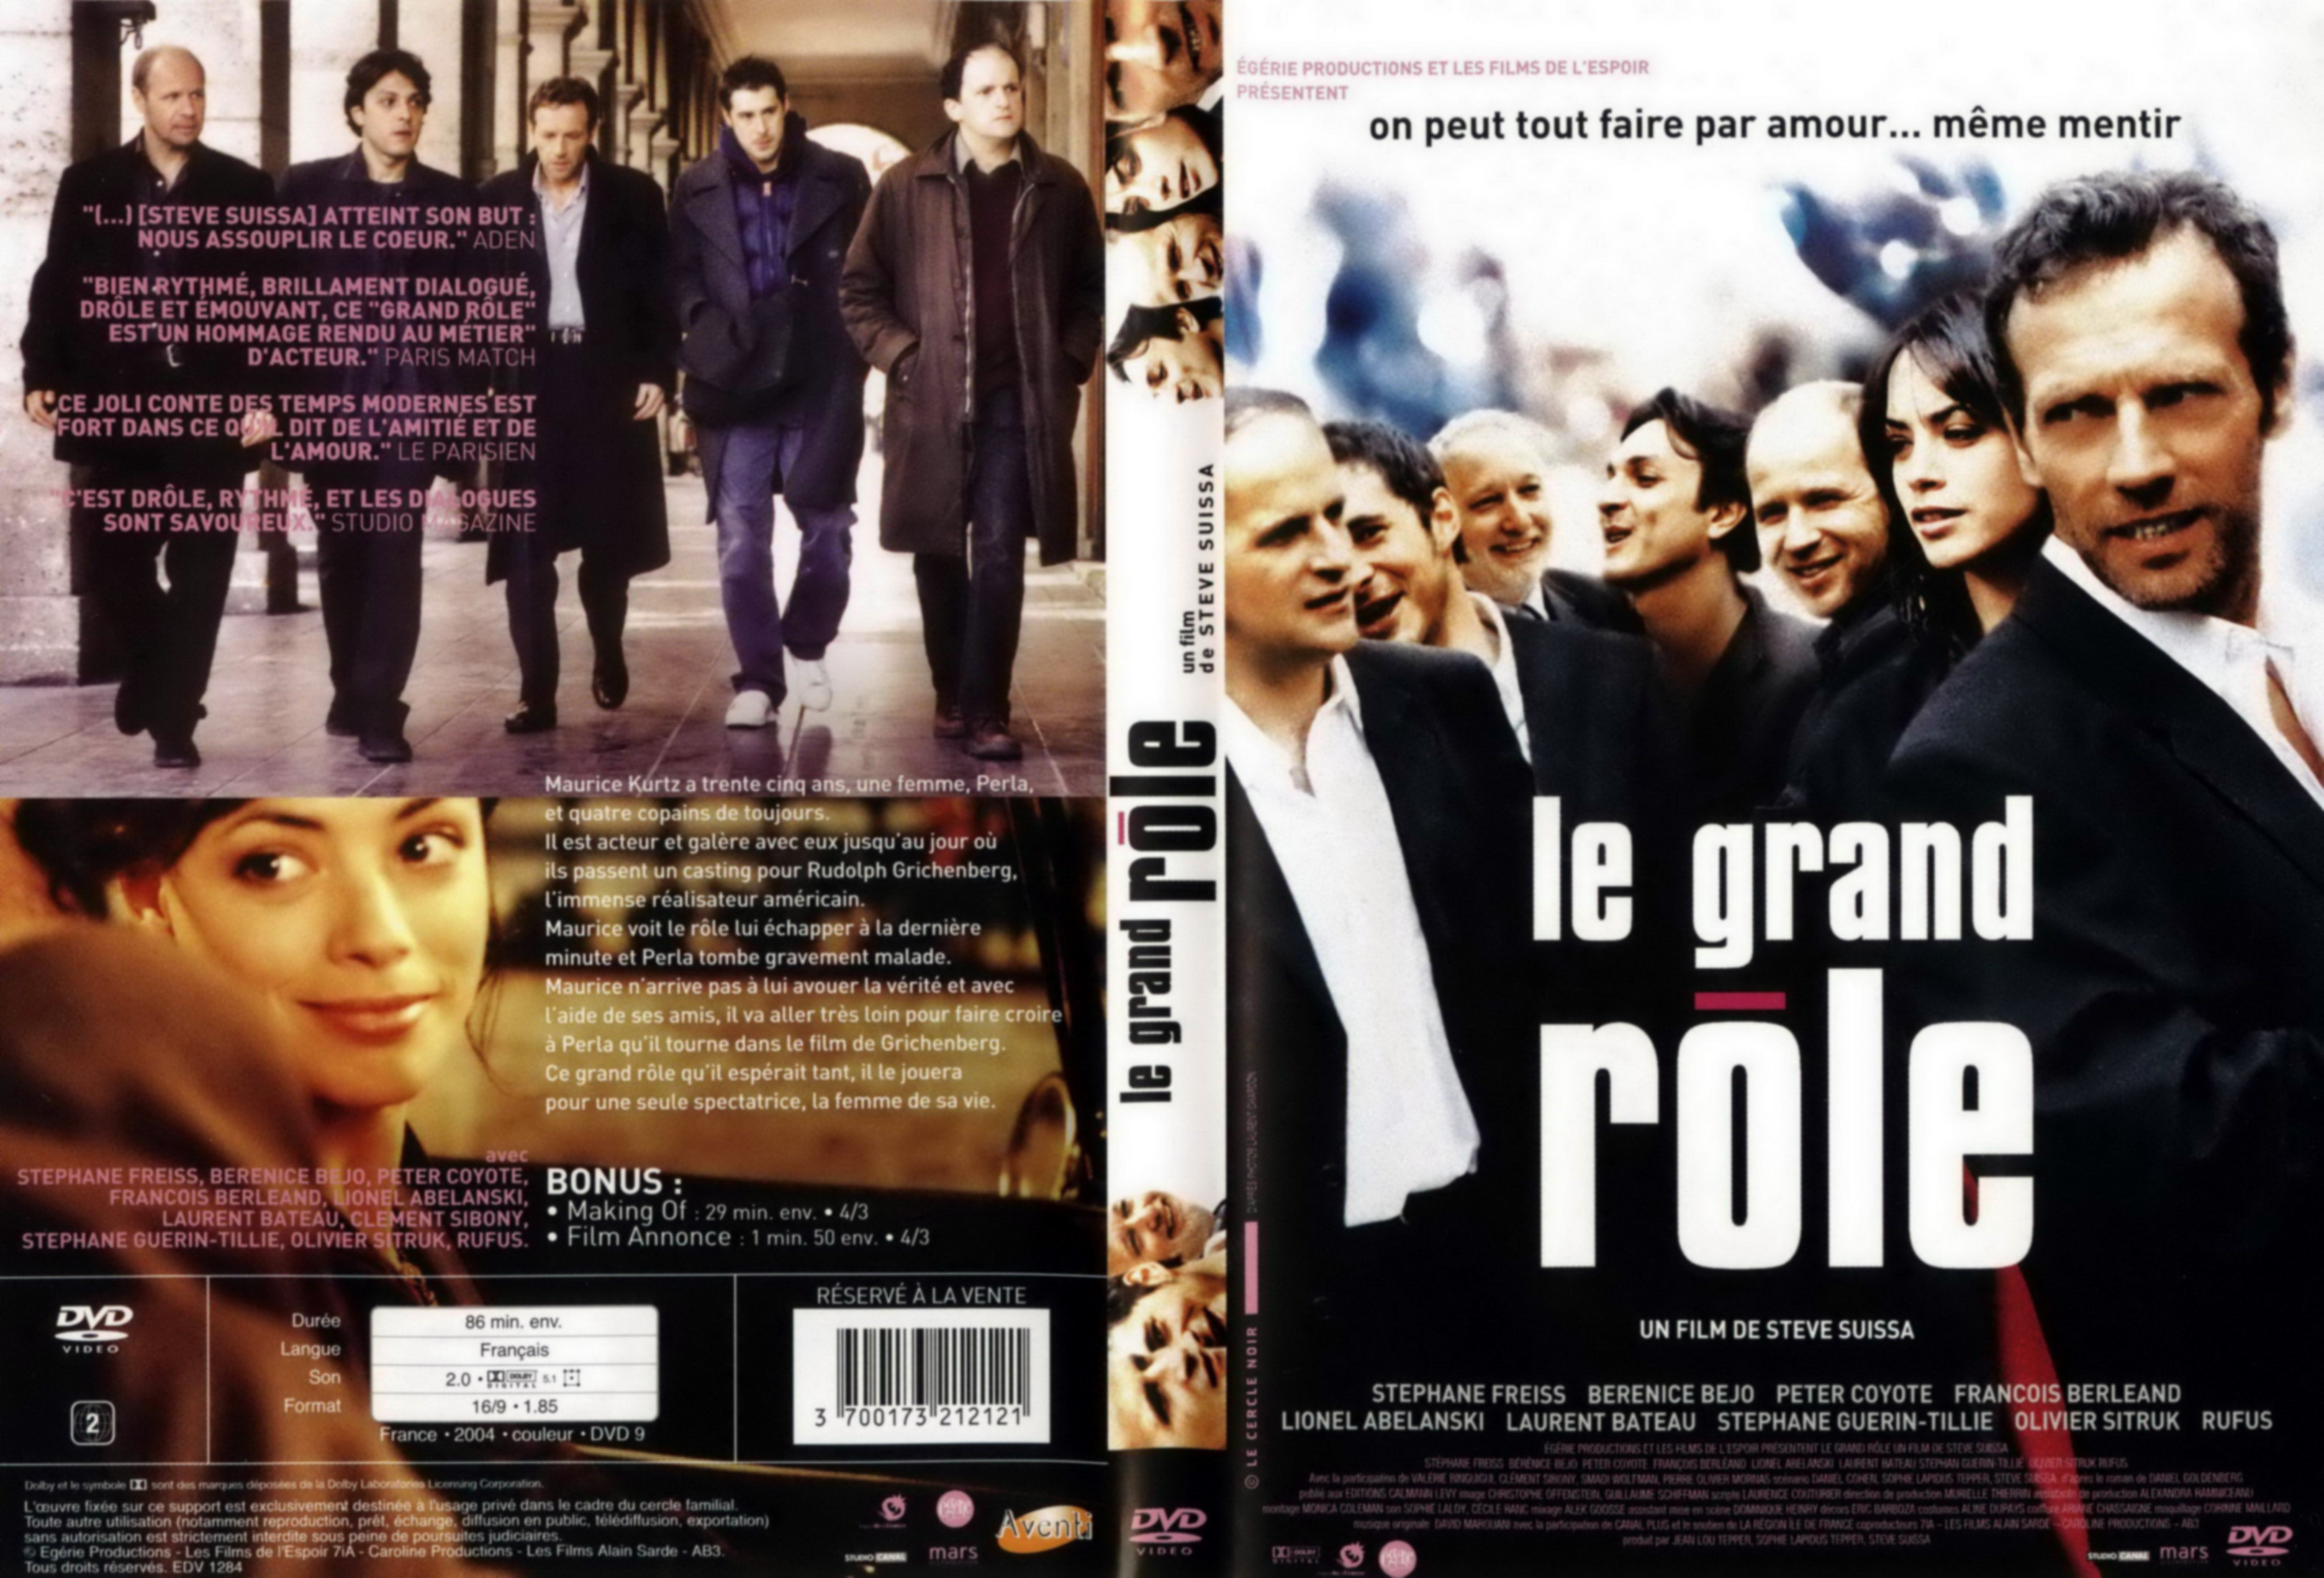 Jaquette DVD Le grand role